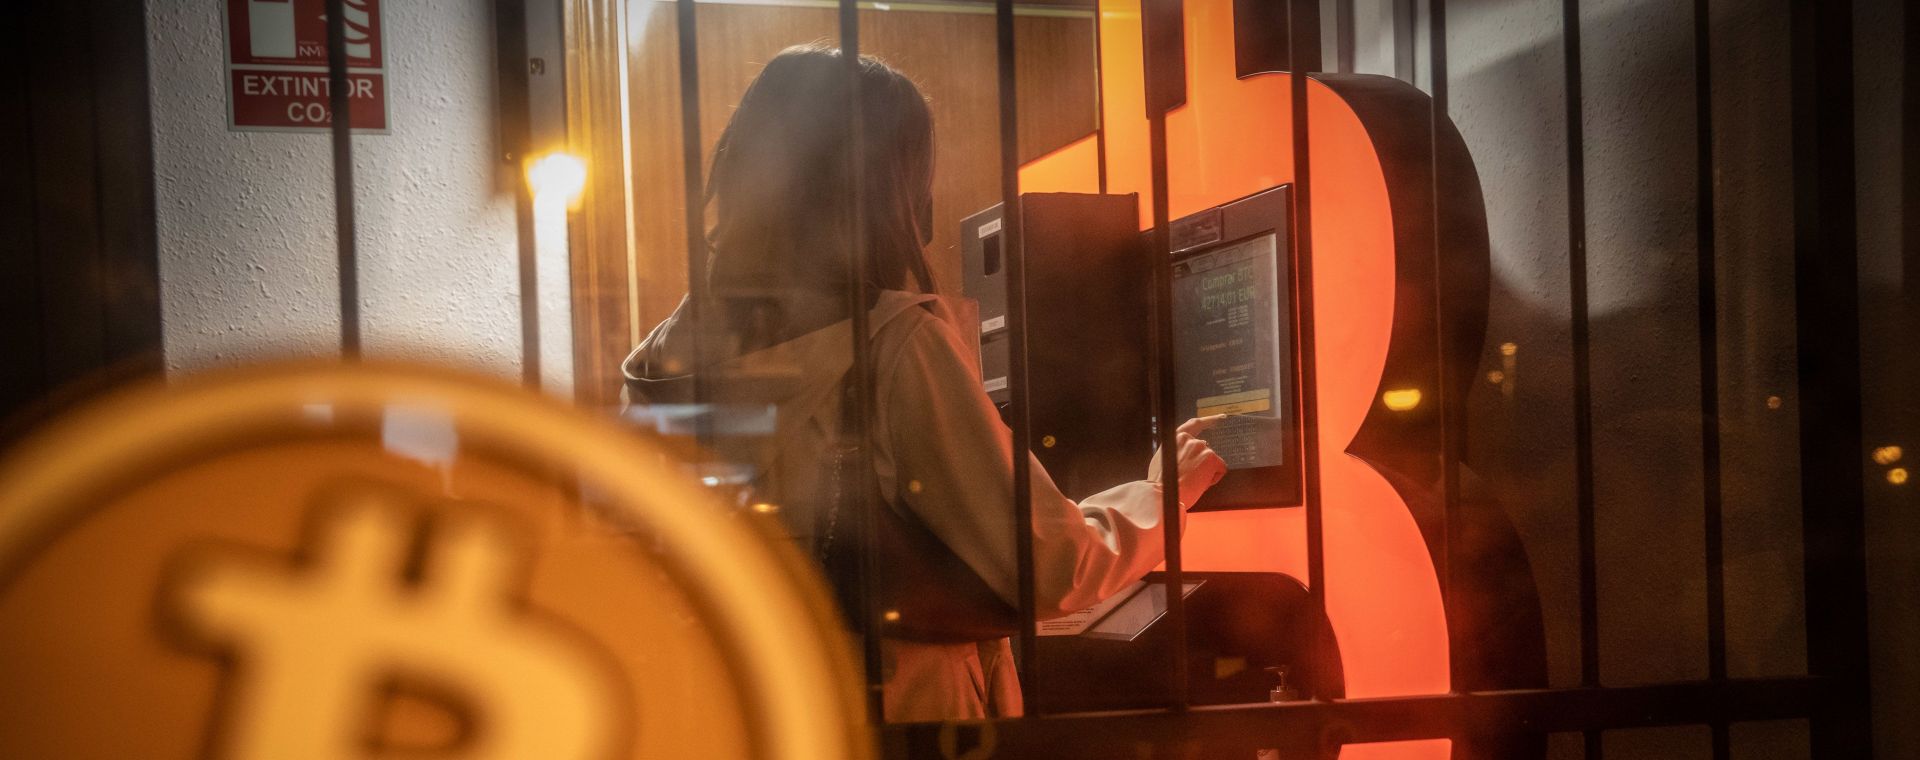 Seorang pelanggan menggunakan mesin anjungan tunai mandiri (ATM) Bitcoin di kios Barcelona, Spanyol, pada Selasa, 23 Februari 2021. /Bloomberg